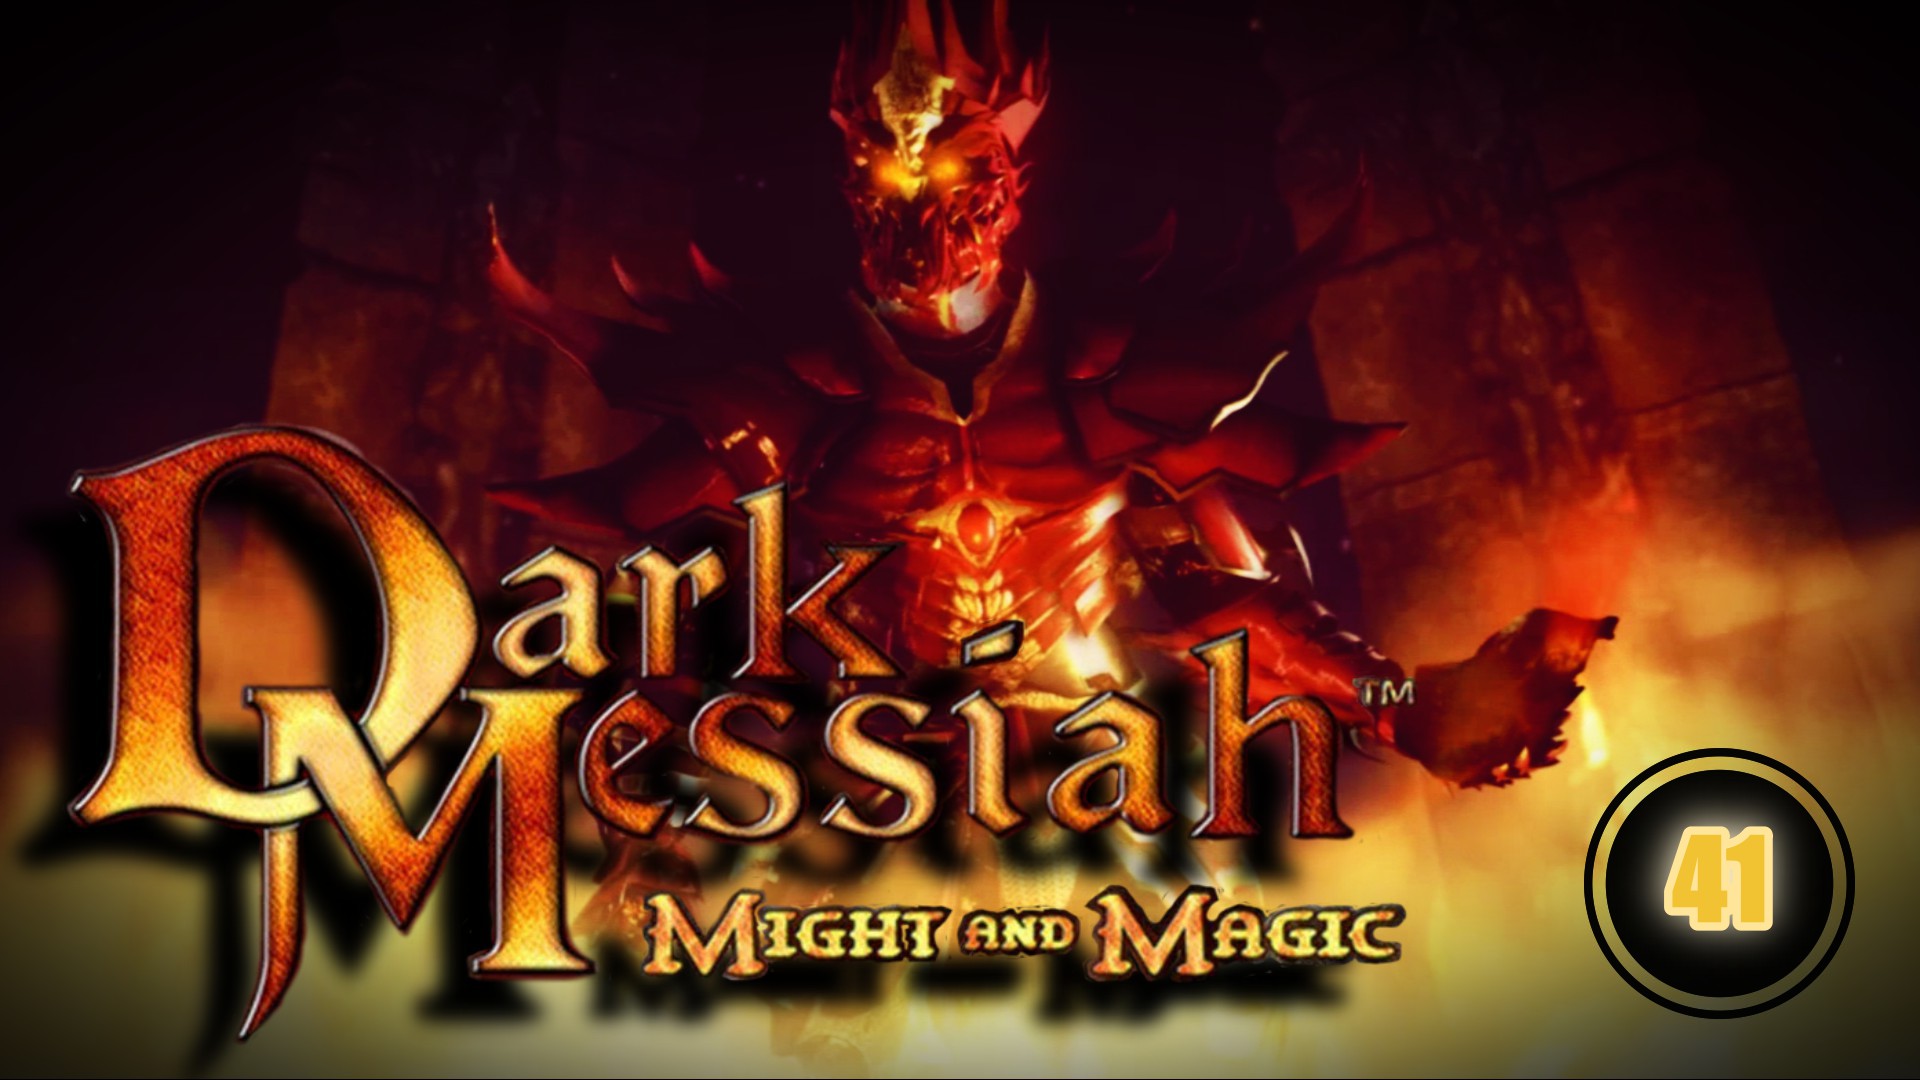 Dark Messiah of Might and Magic 41